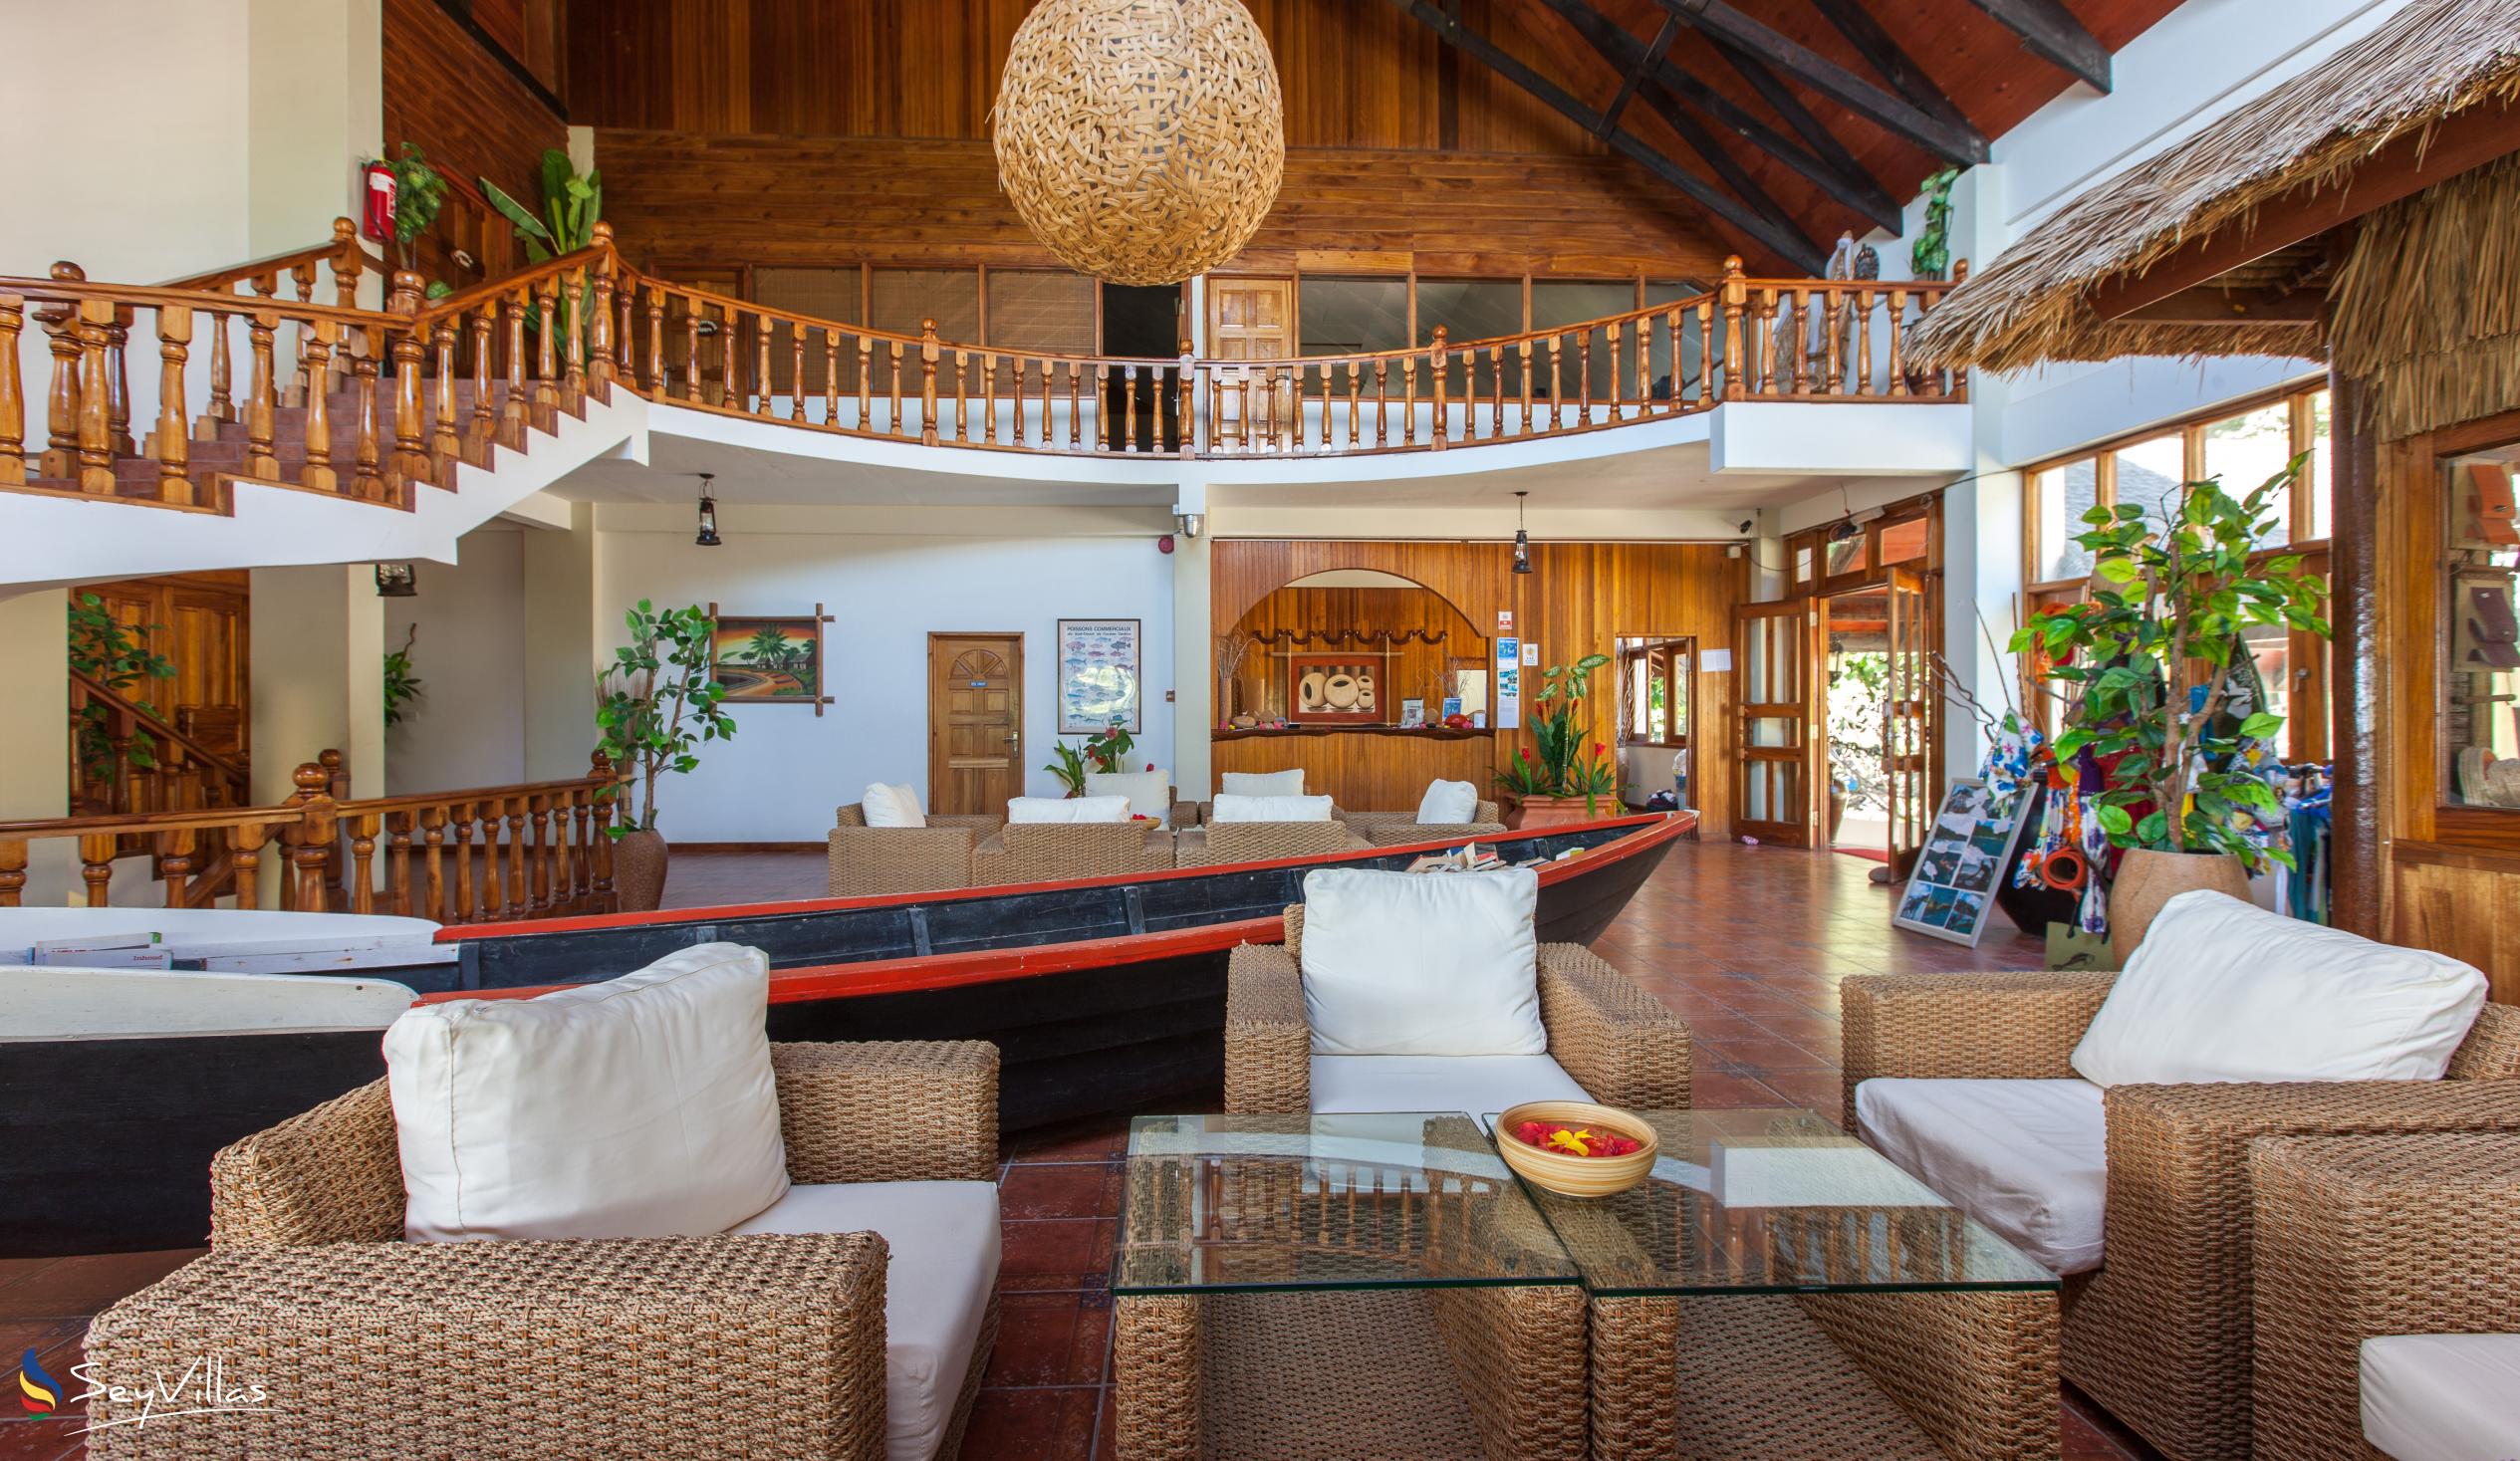 Foto 14: Patatran Village Hotel - Innenbereich - La Digue (Seychellen)